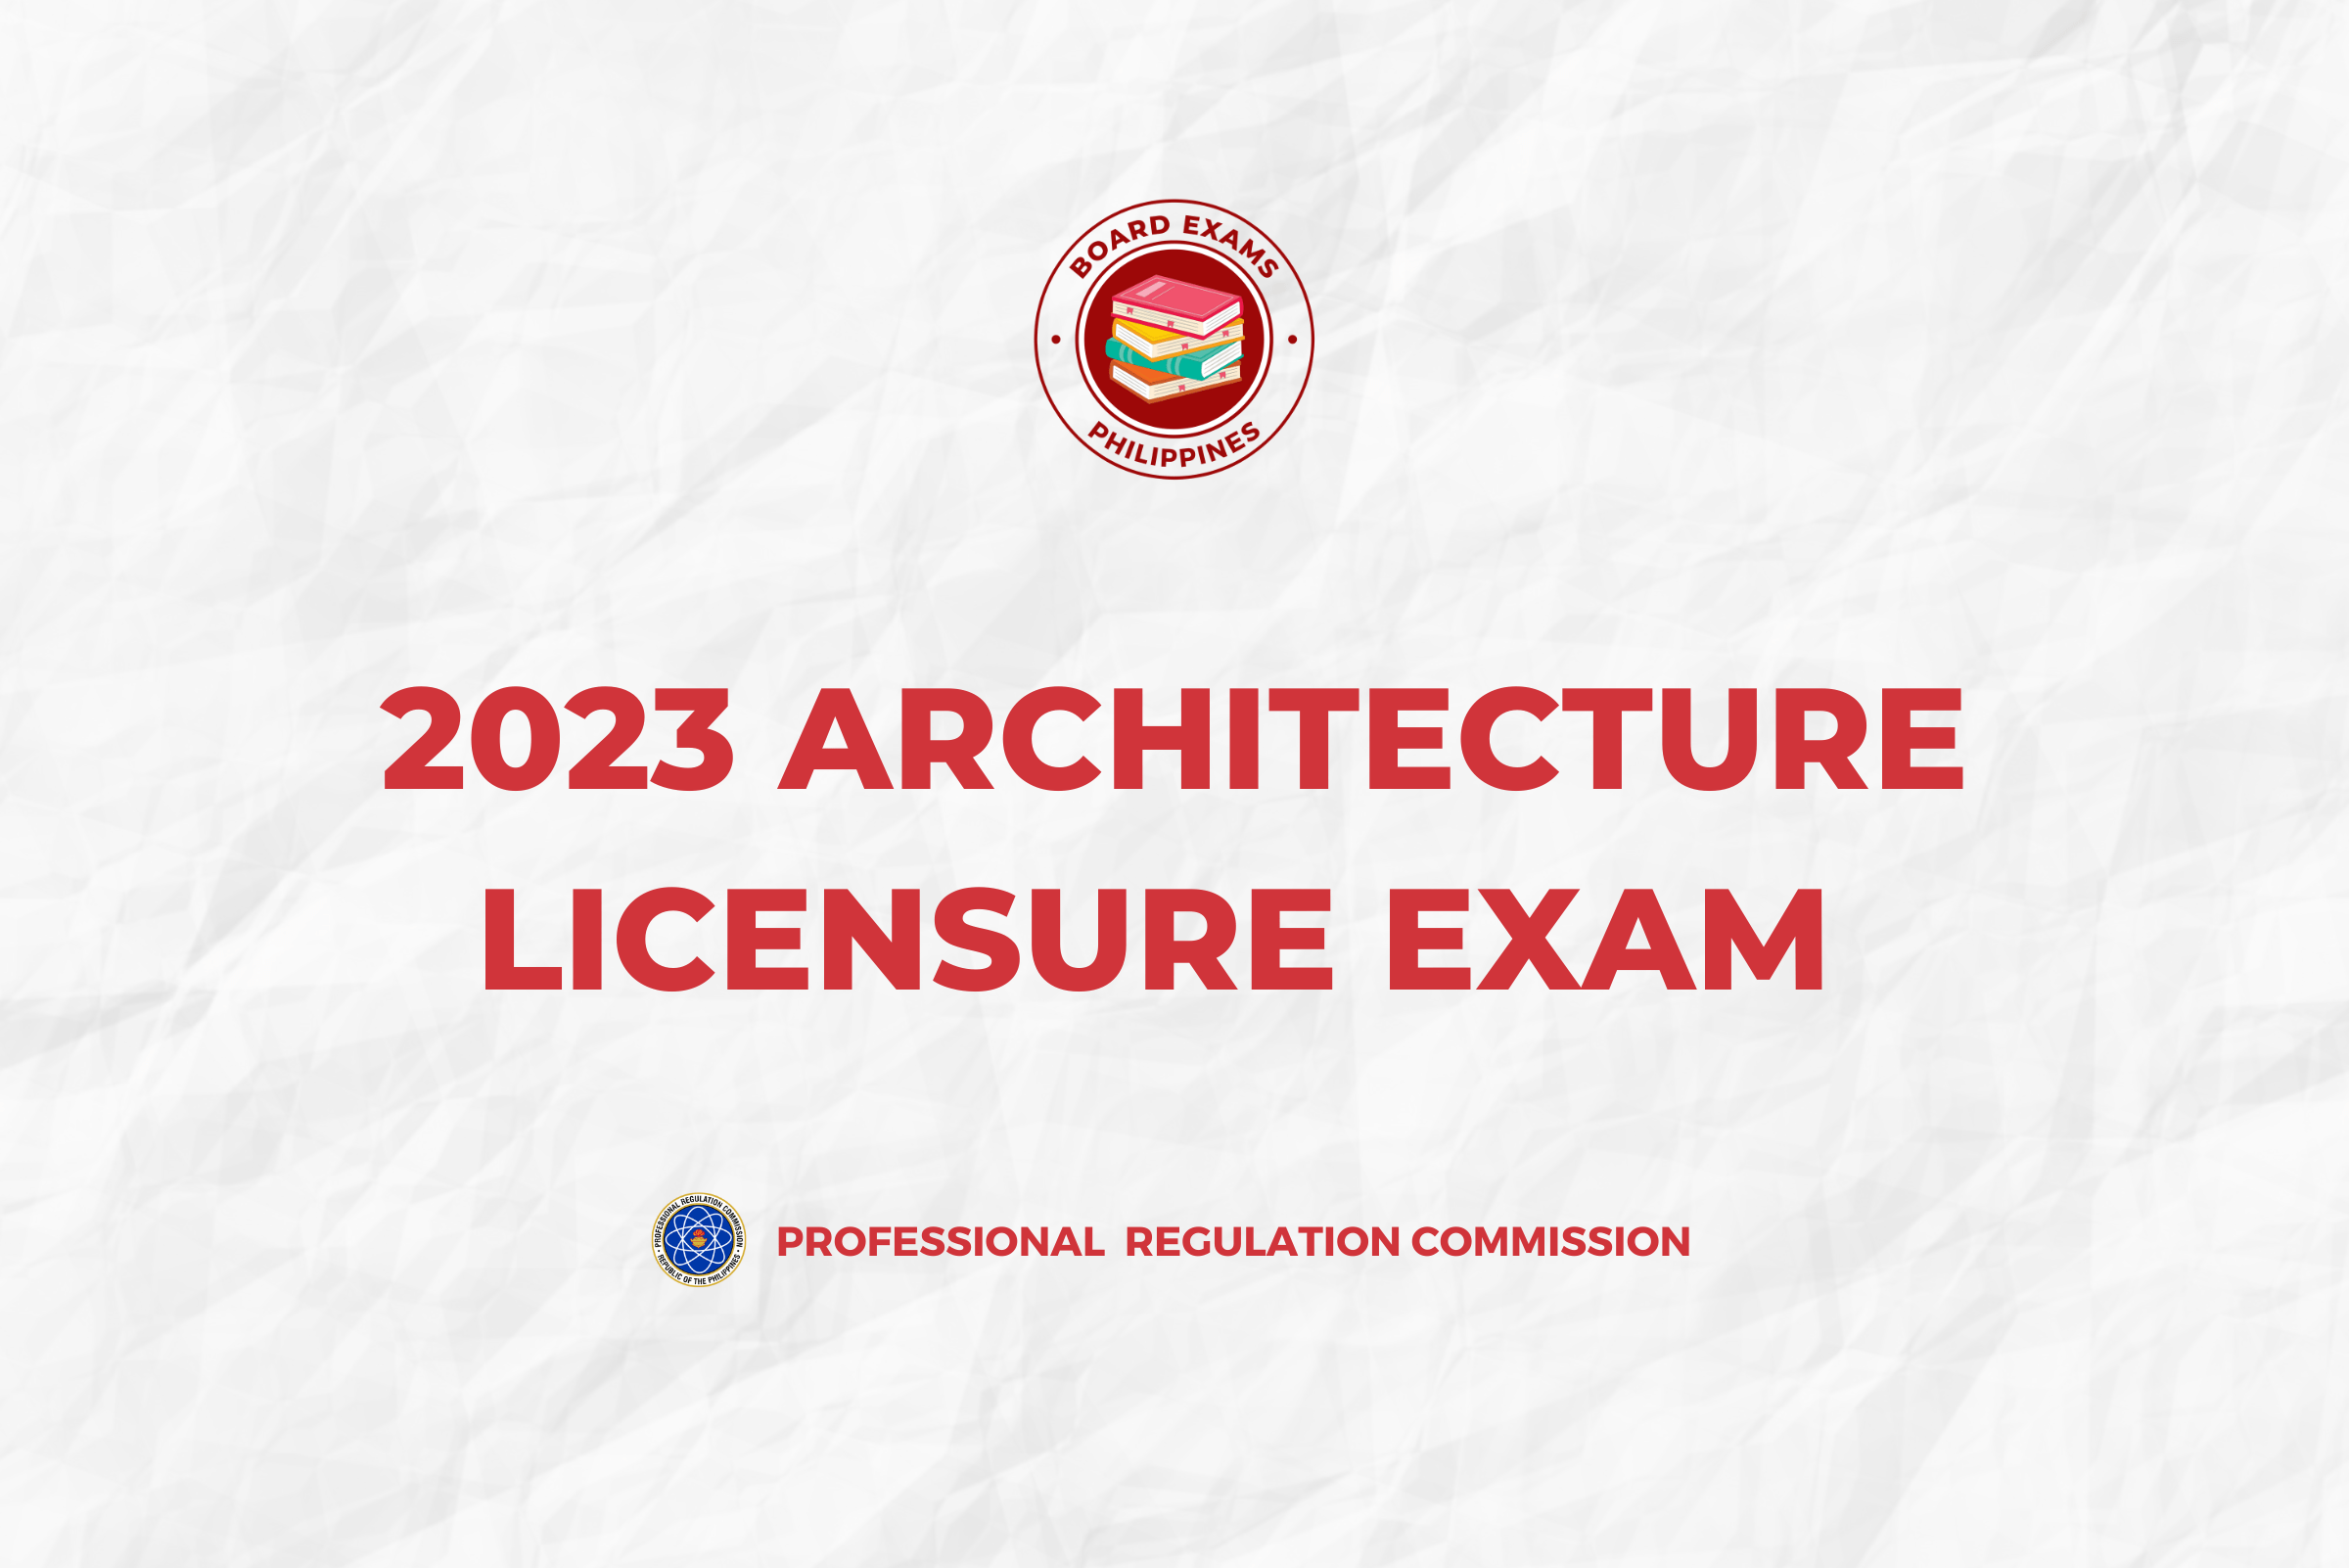 2023 ARCHITECTURE LICENSURE EXAM Exam Schedule, Application Period